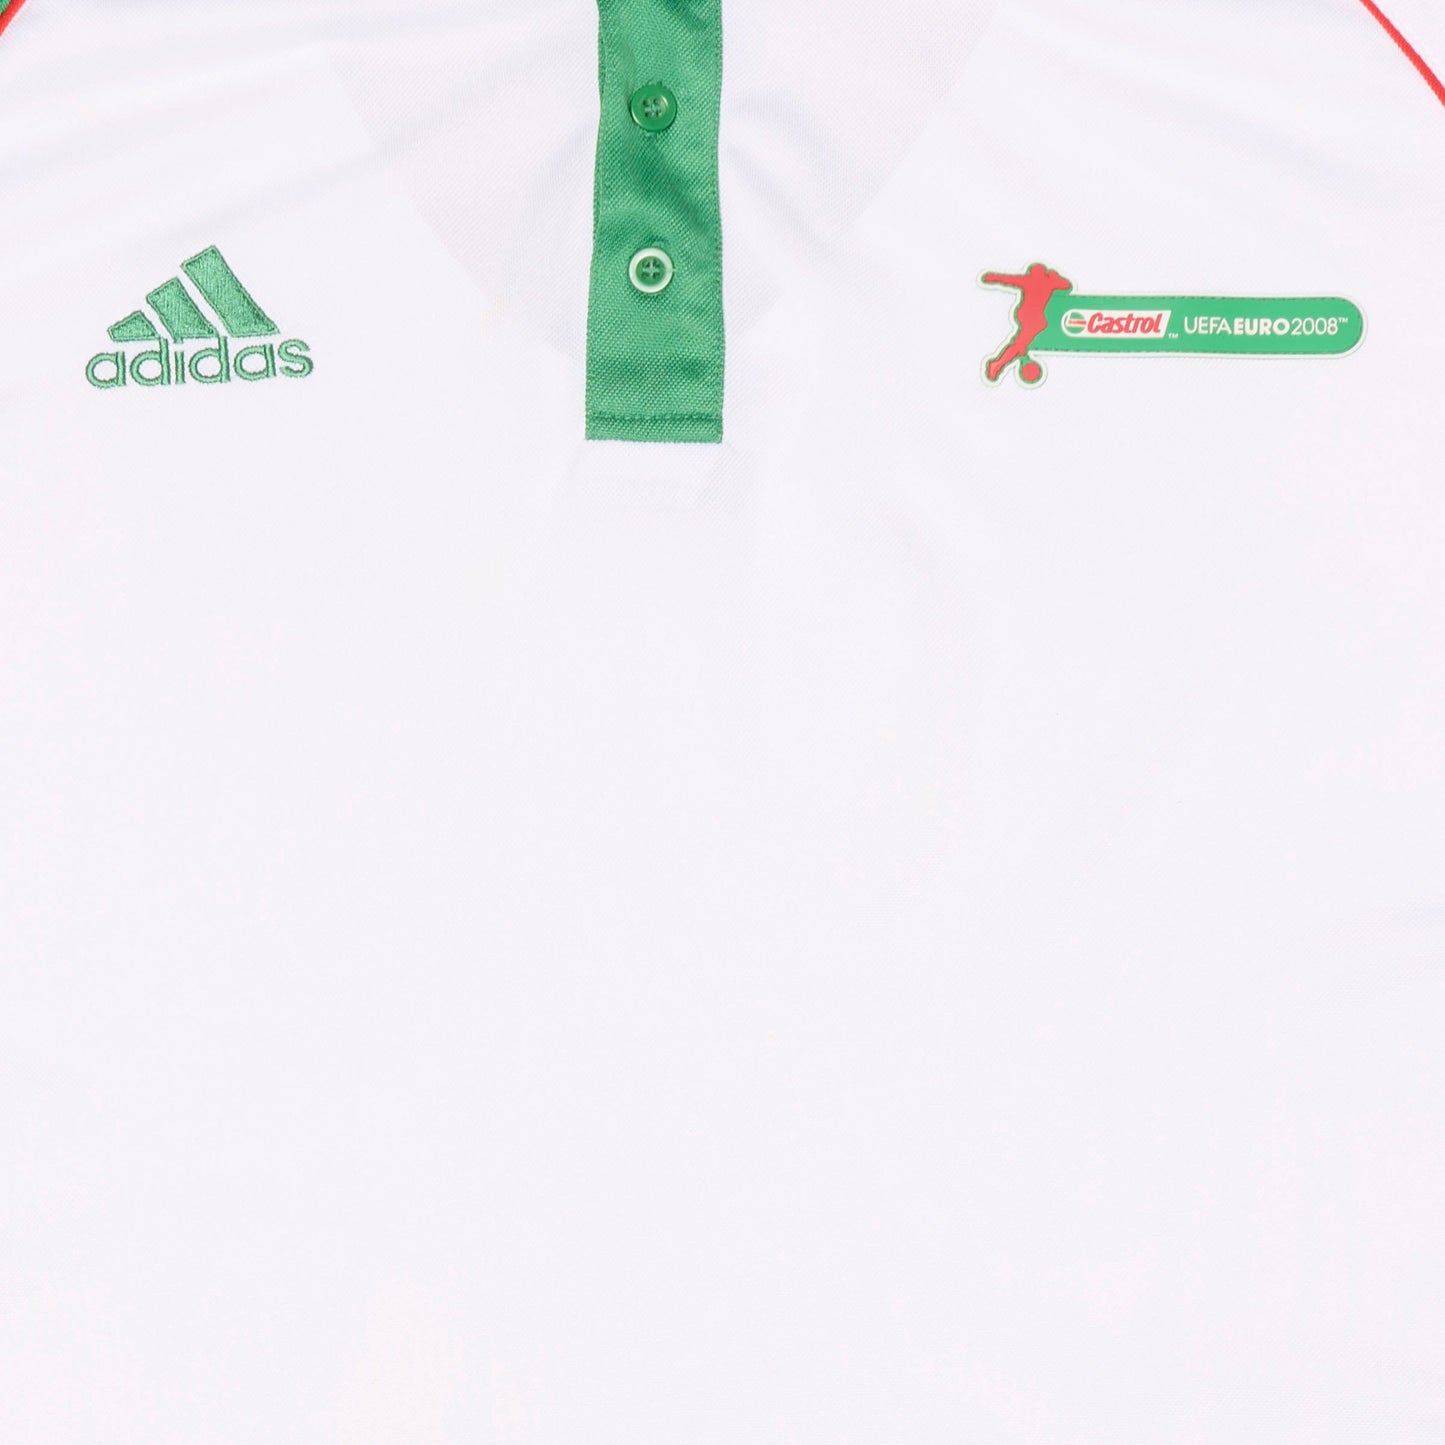 Adidas Castol  Collared Sports Shirt - S